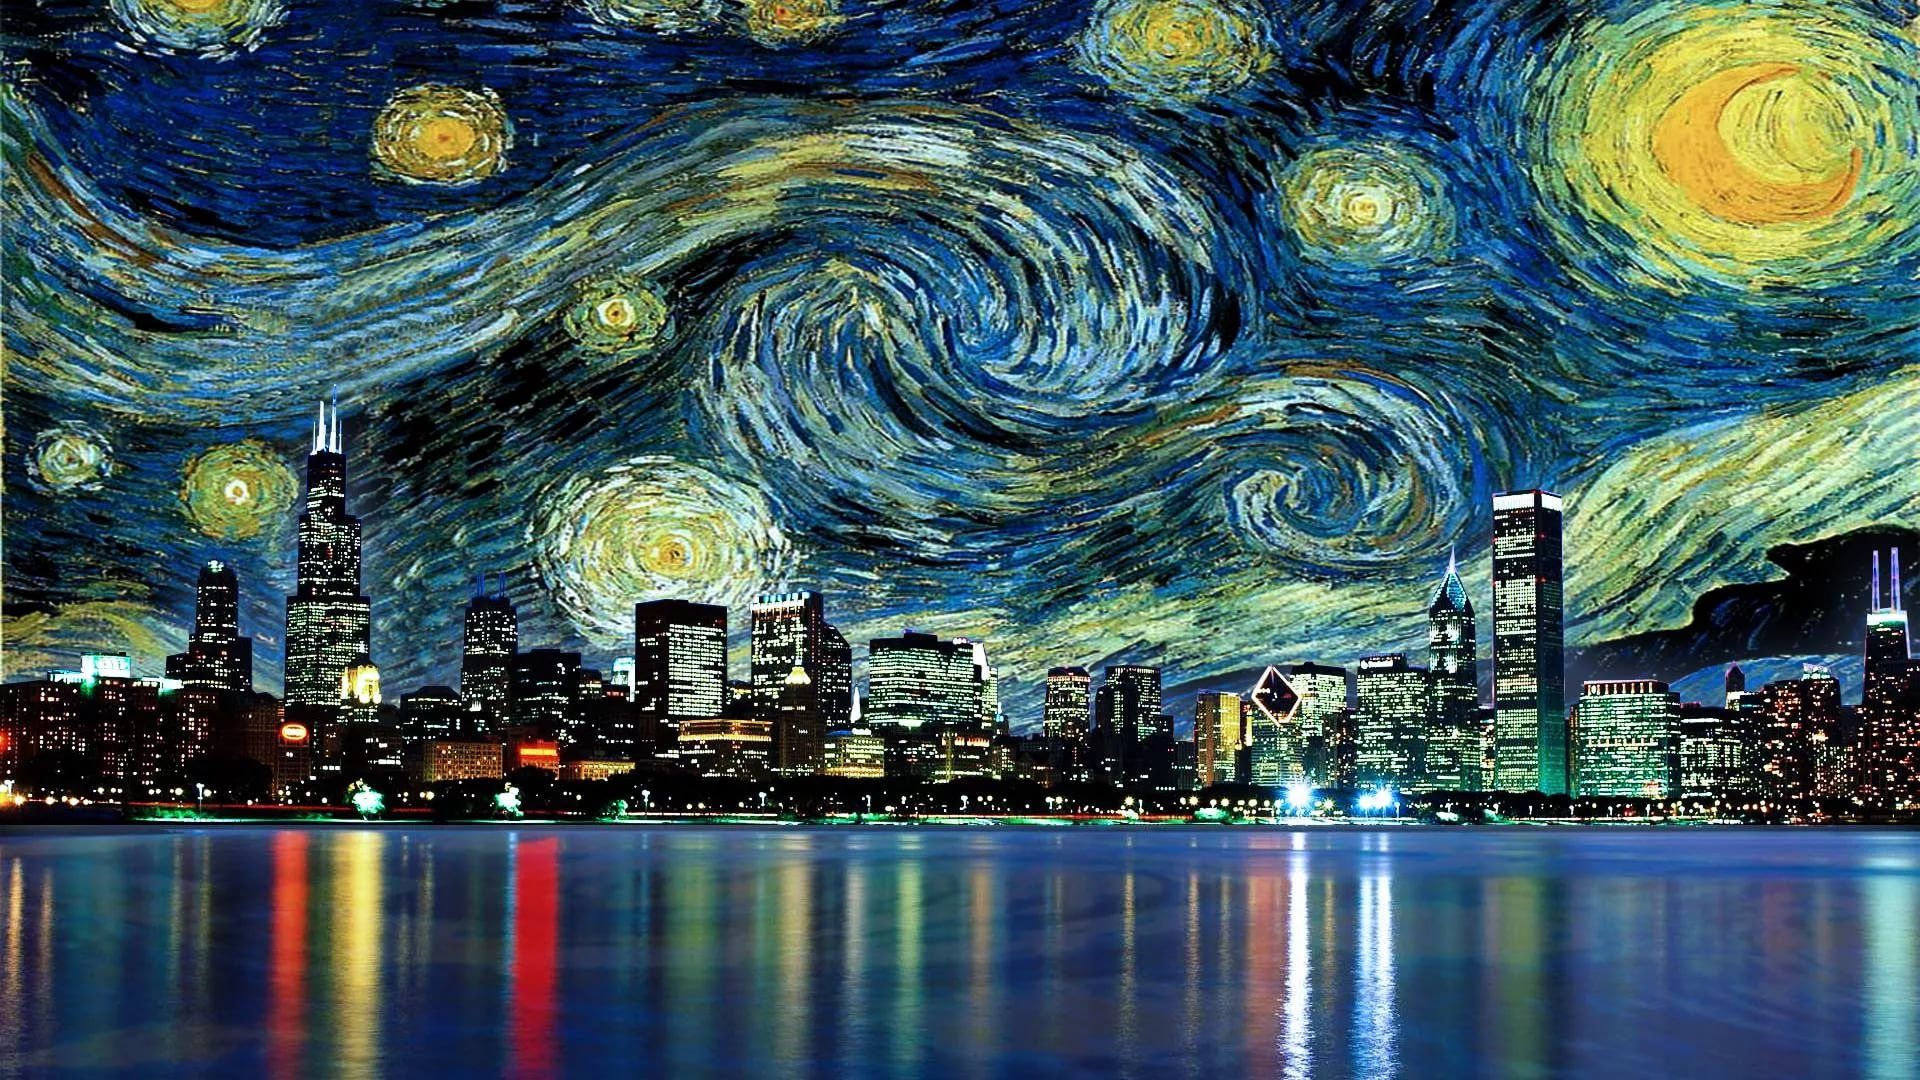 Starry Night download wallpaper image